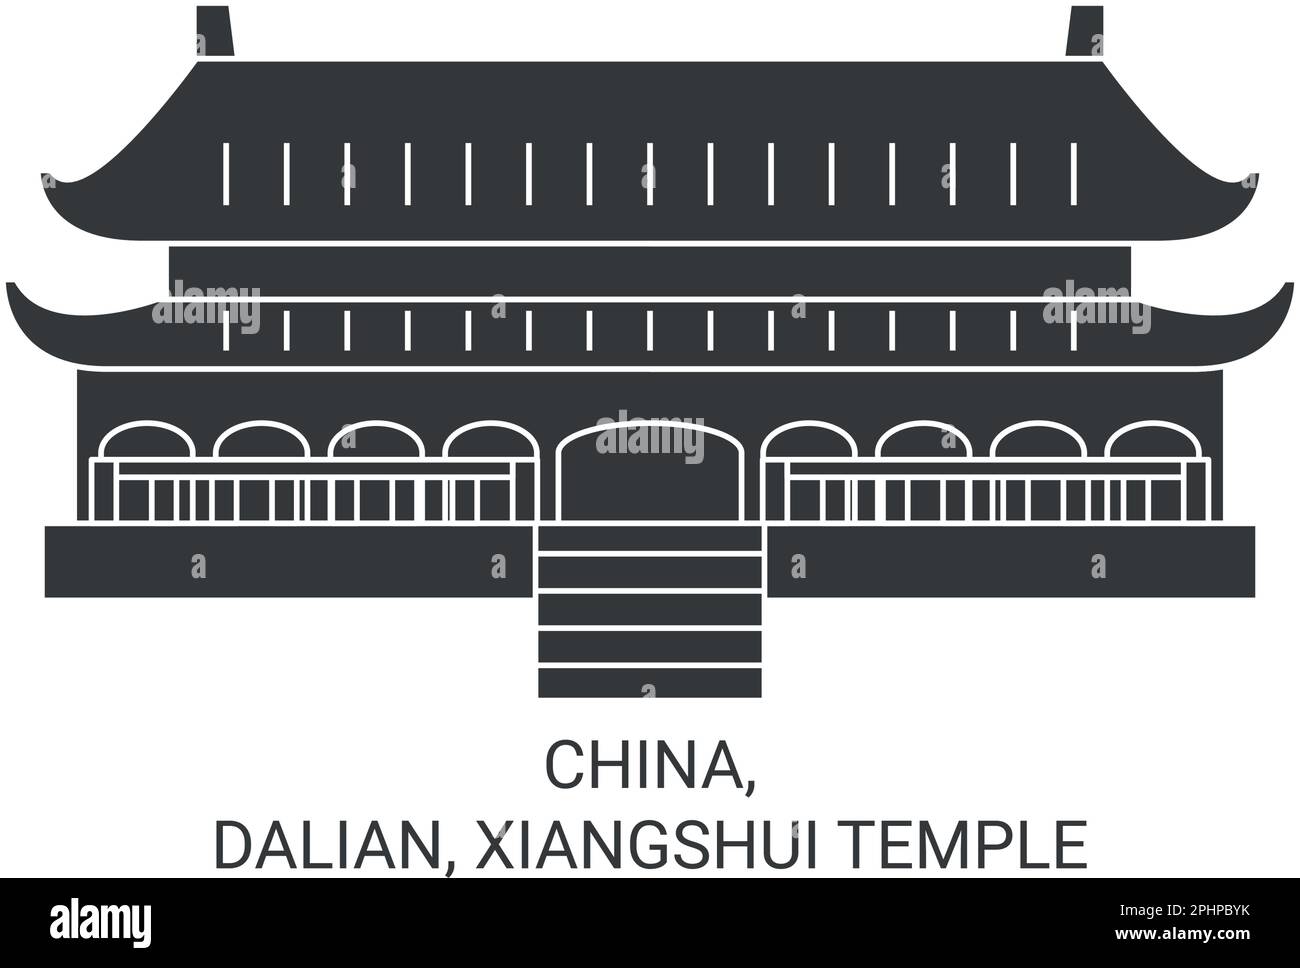 China, Dalian, Xiangshui Temple travel landmark vector illustration Stock Vector